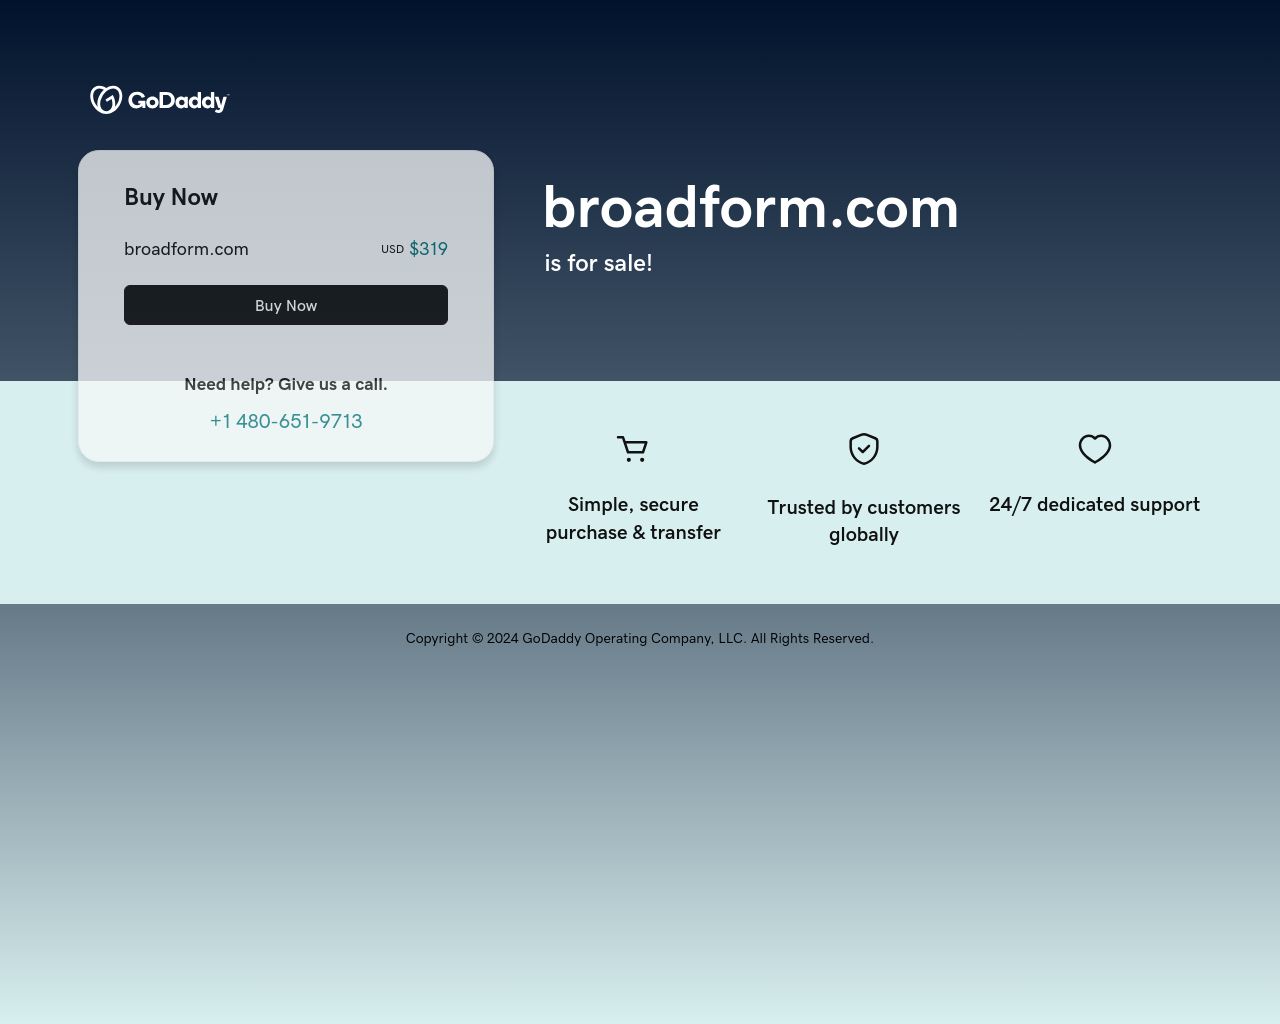 broadform.com